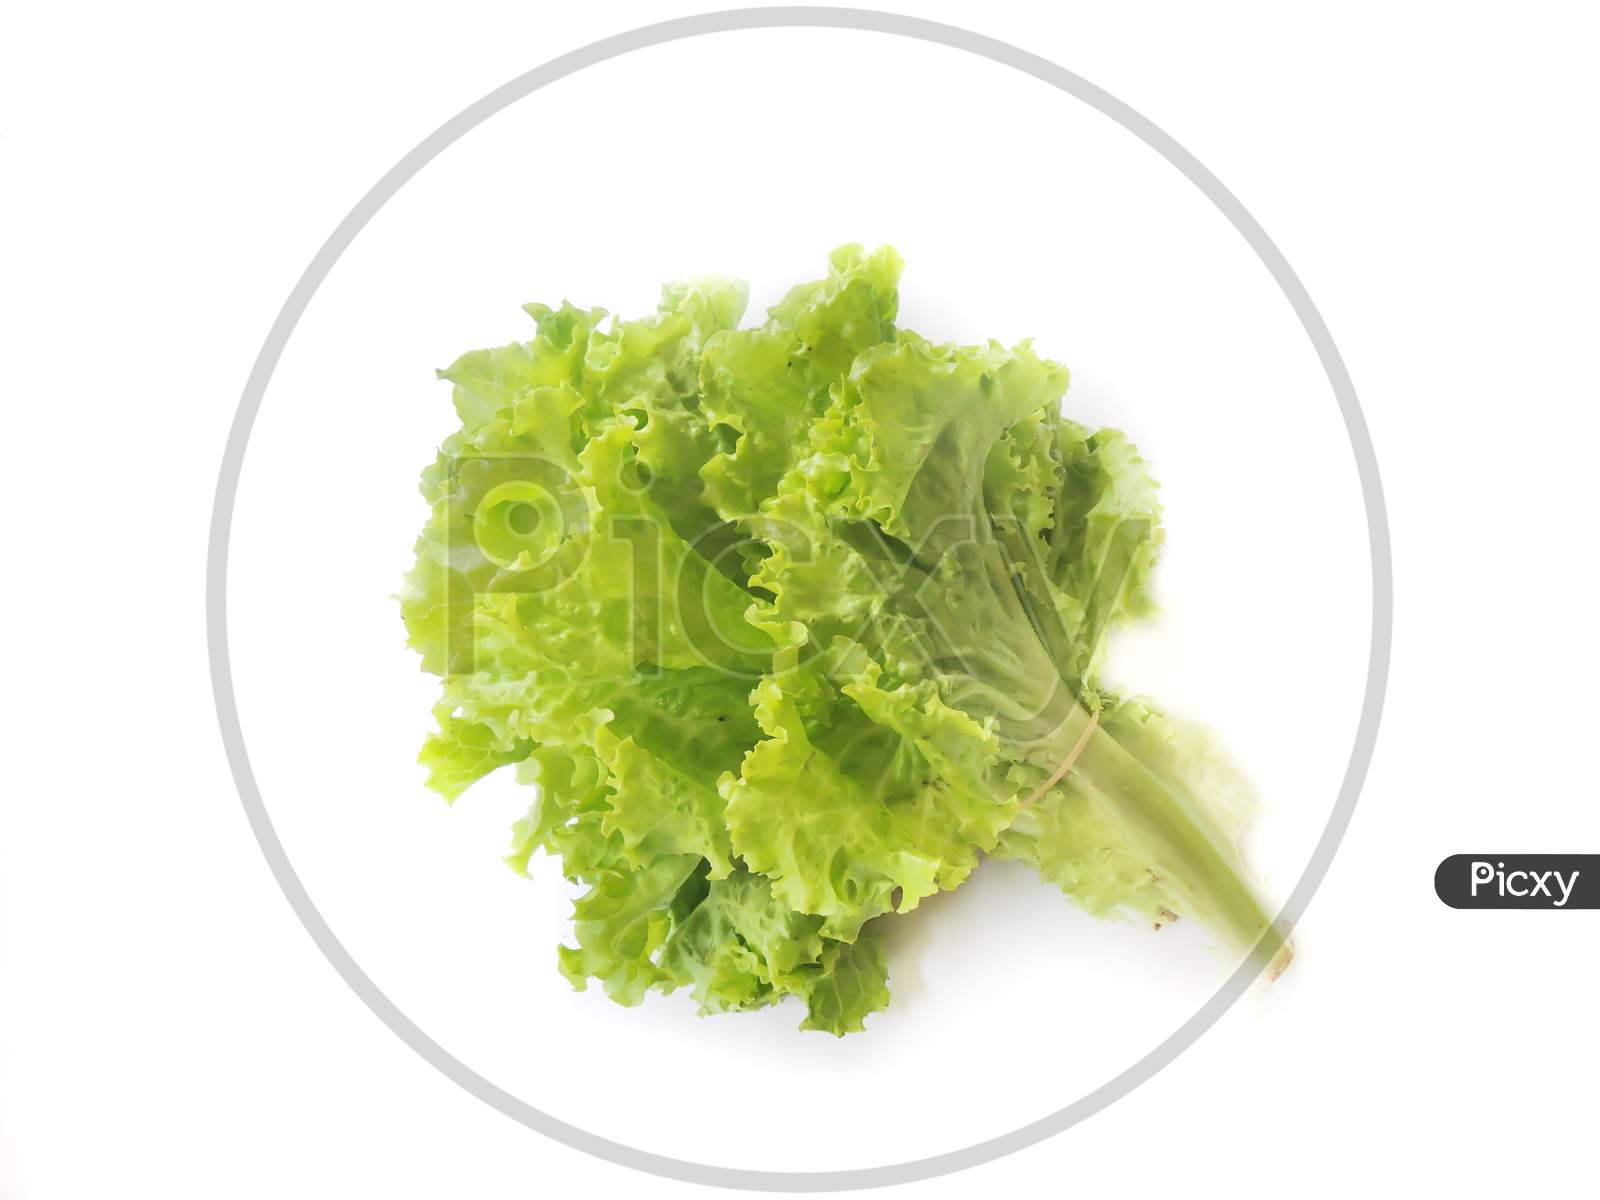 Leafy vegetable - Lettuce